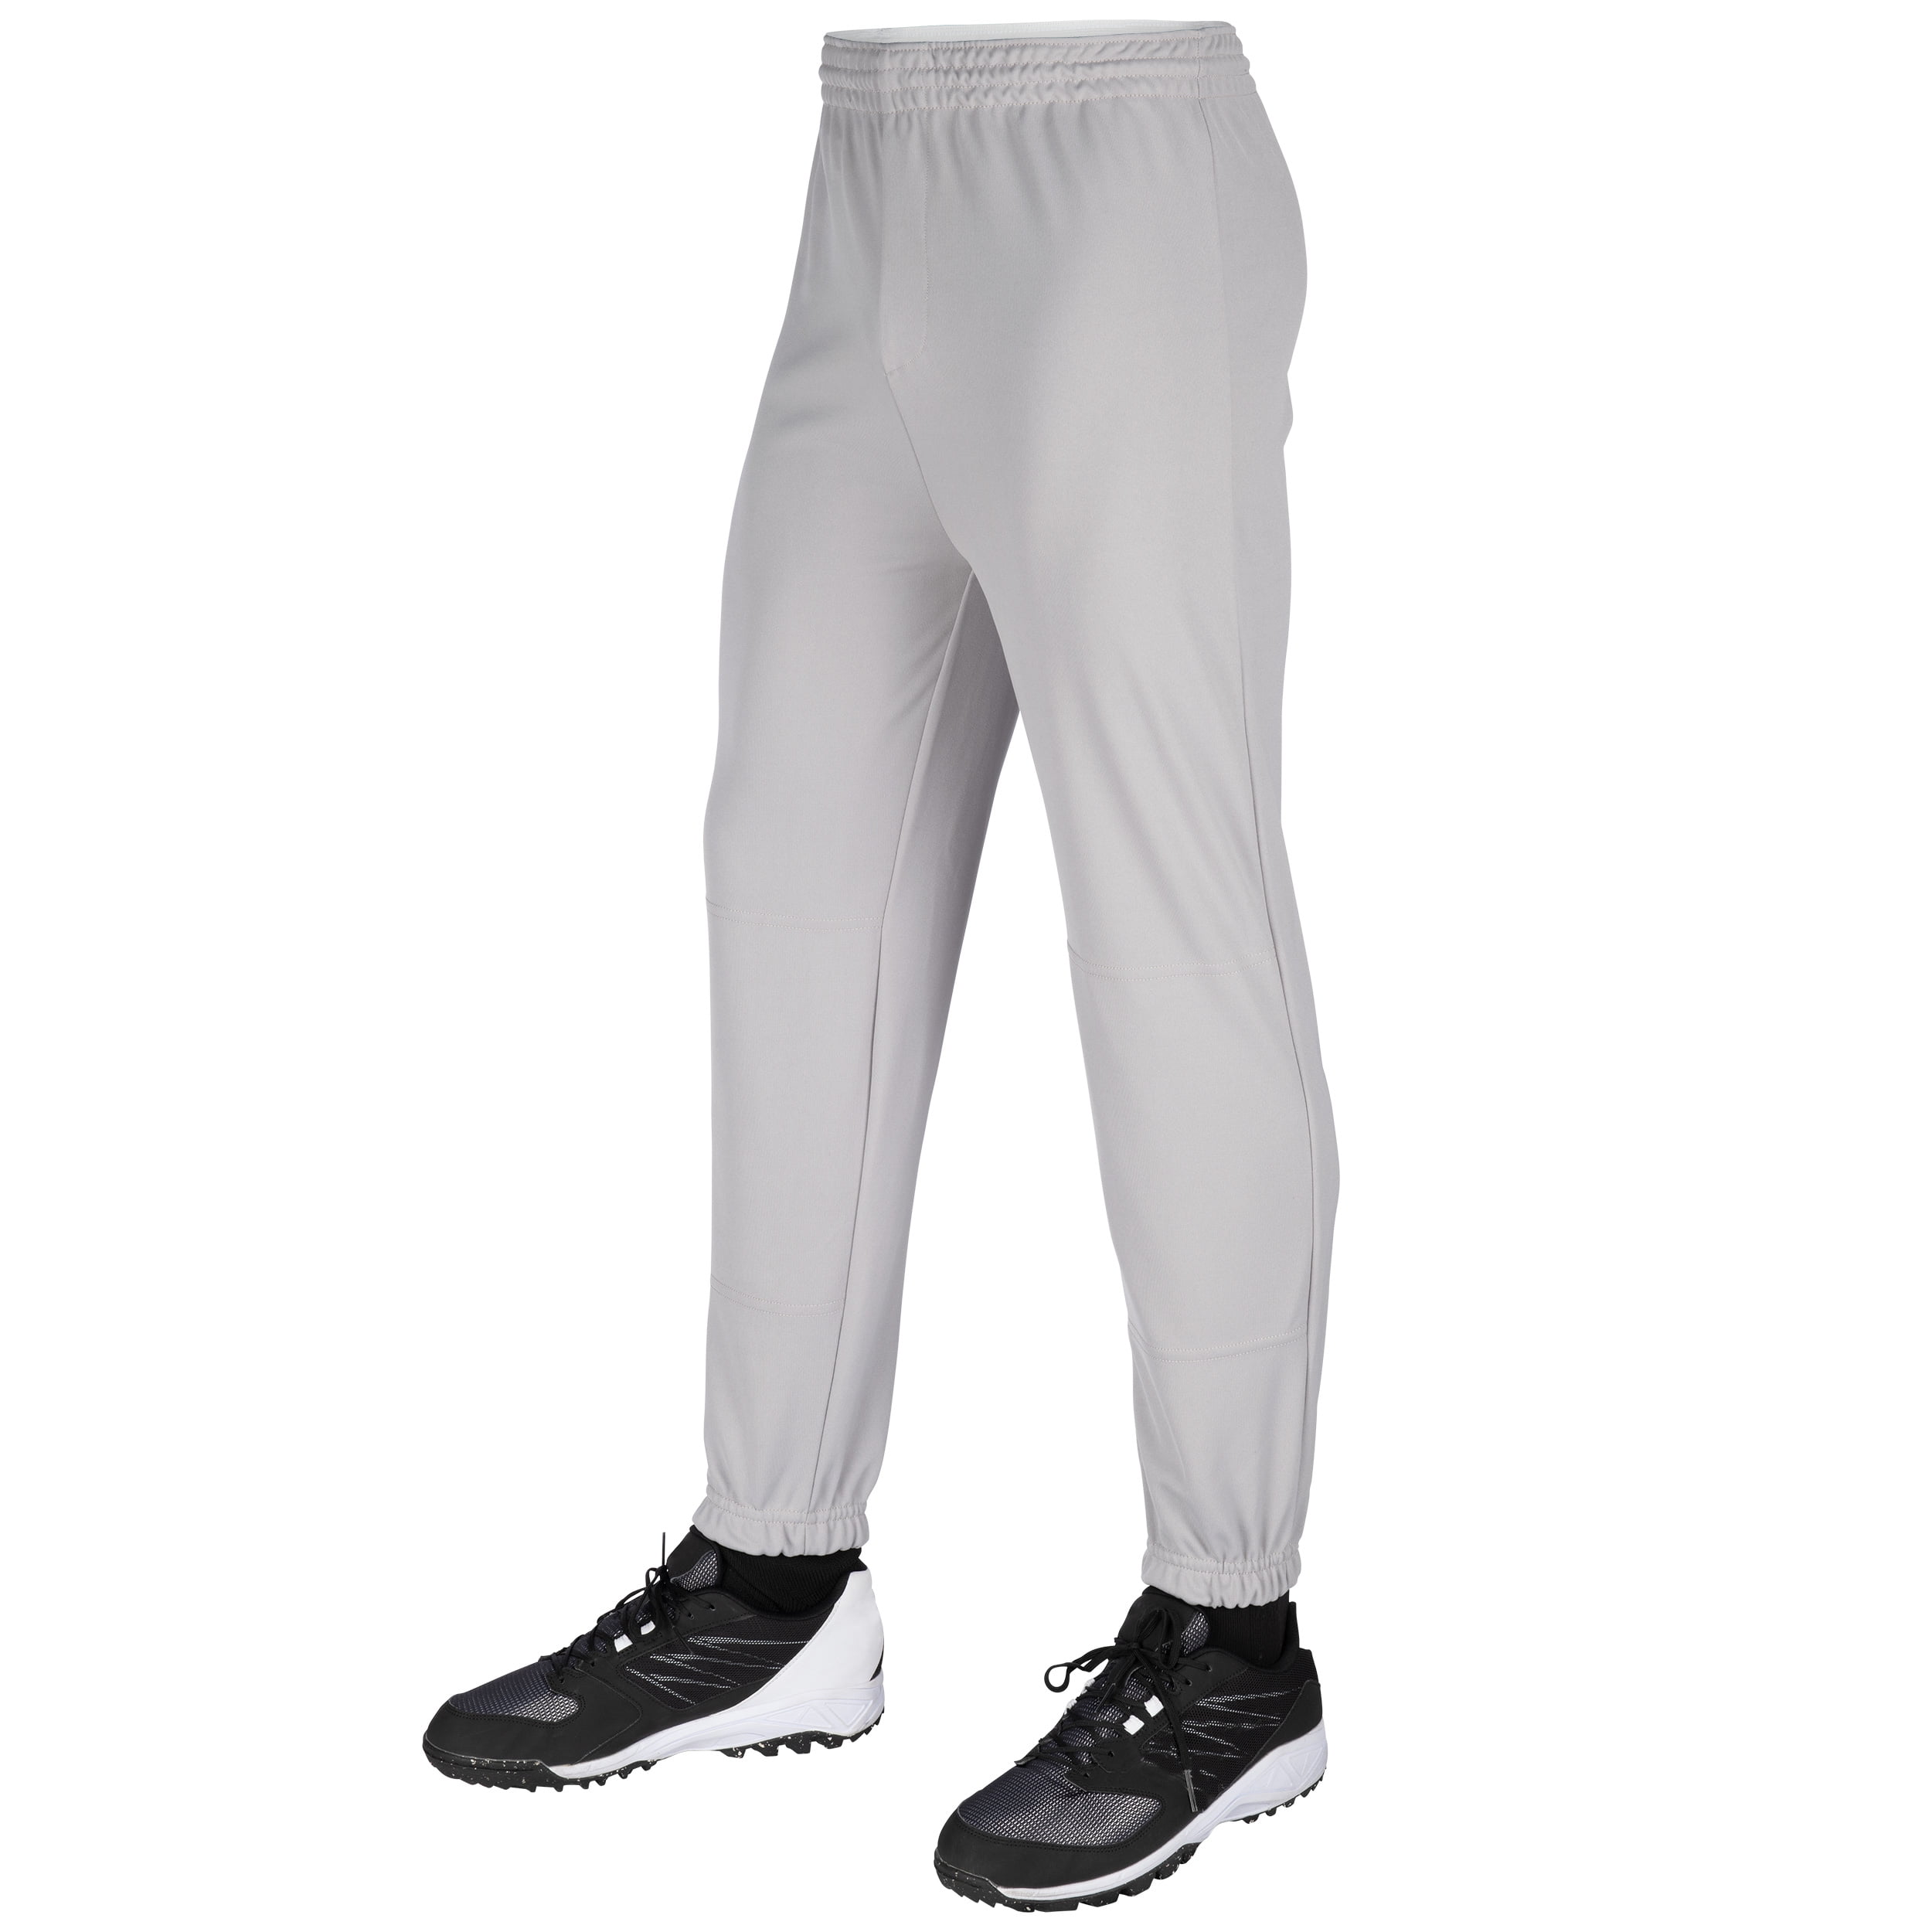 Champro Sports Performer Pull-Up Baseball Pants, Youth Small, Grey